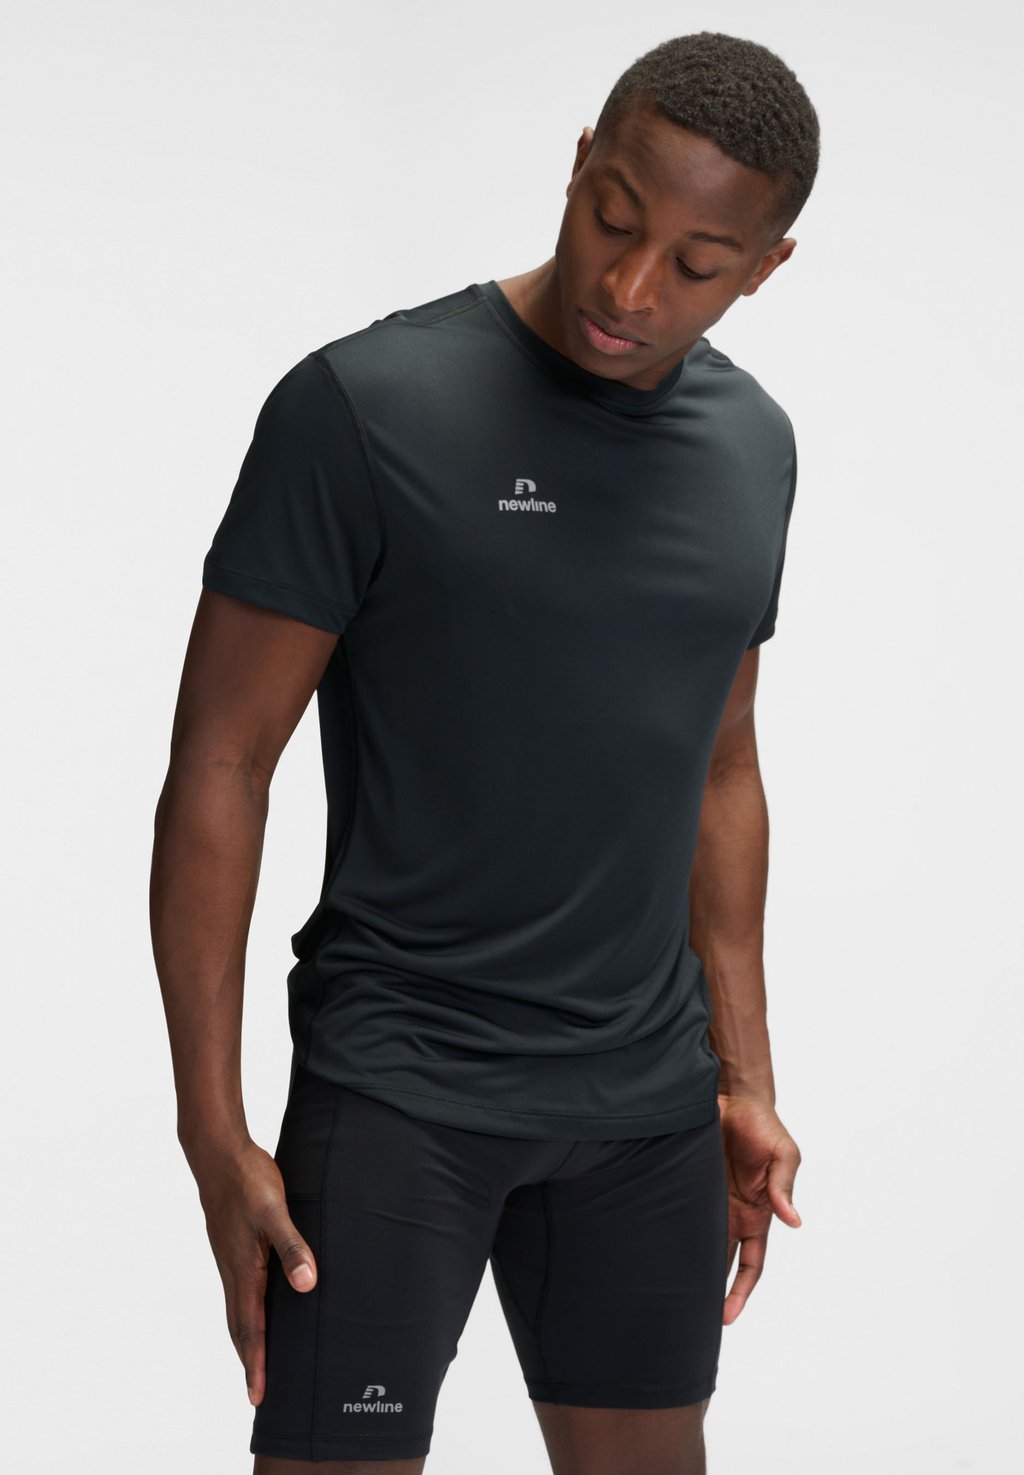 Спортивная футболка BEAT Newline, цвет black